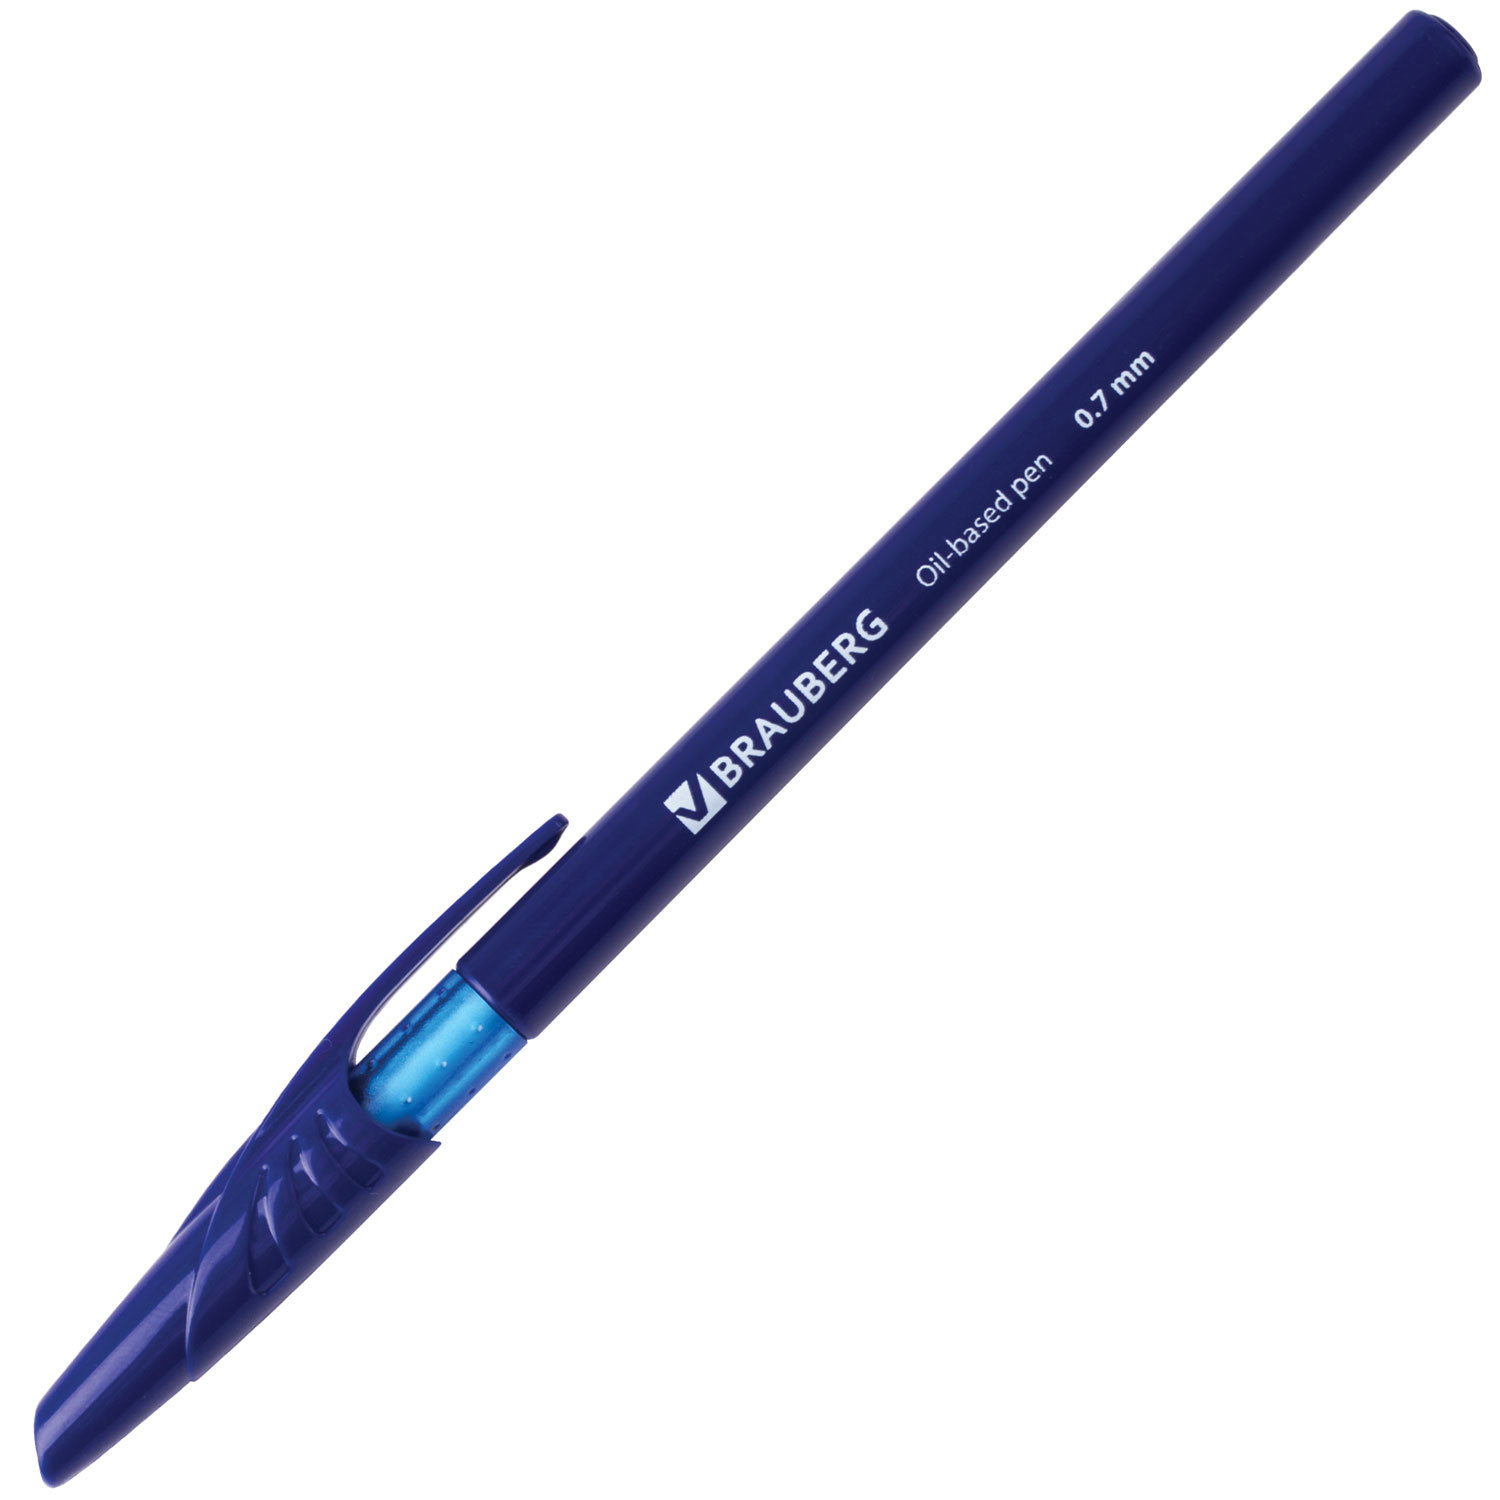 Brauberg 0.7. Ручка БРАУБЕРГ 0.7 масляная. Ручка шариковая синяя БРАУБЕРГ. Ручки БРАУБЕРГ 0.7 мм. Ручка BRAUBERG 0.7 мм синяя.